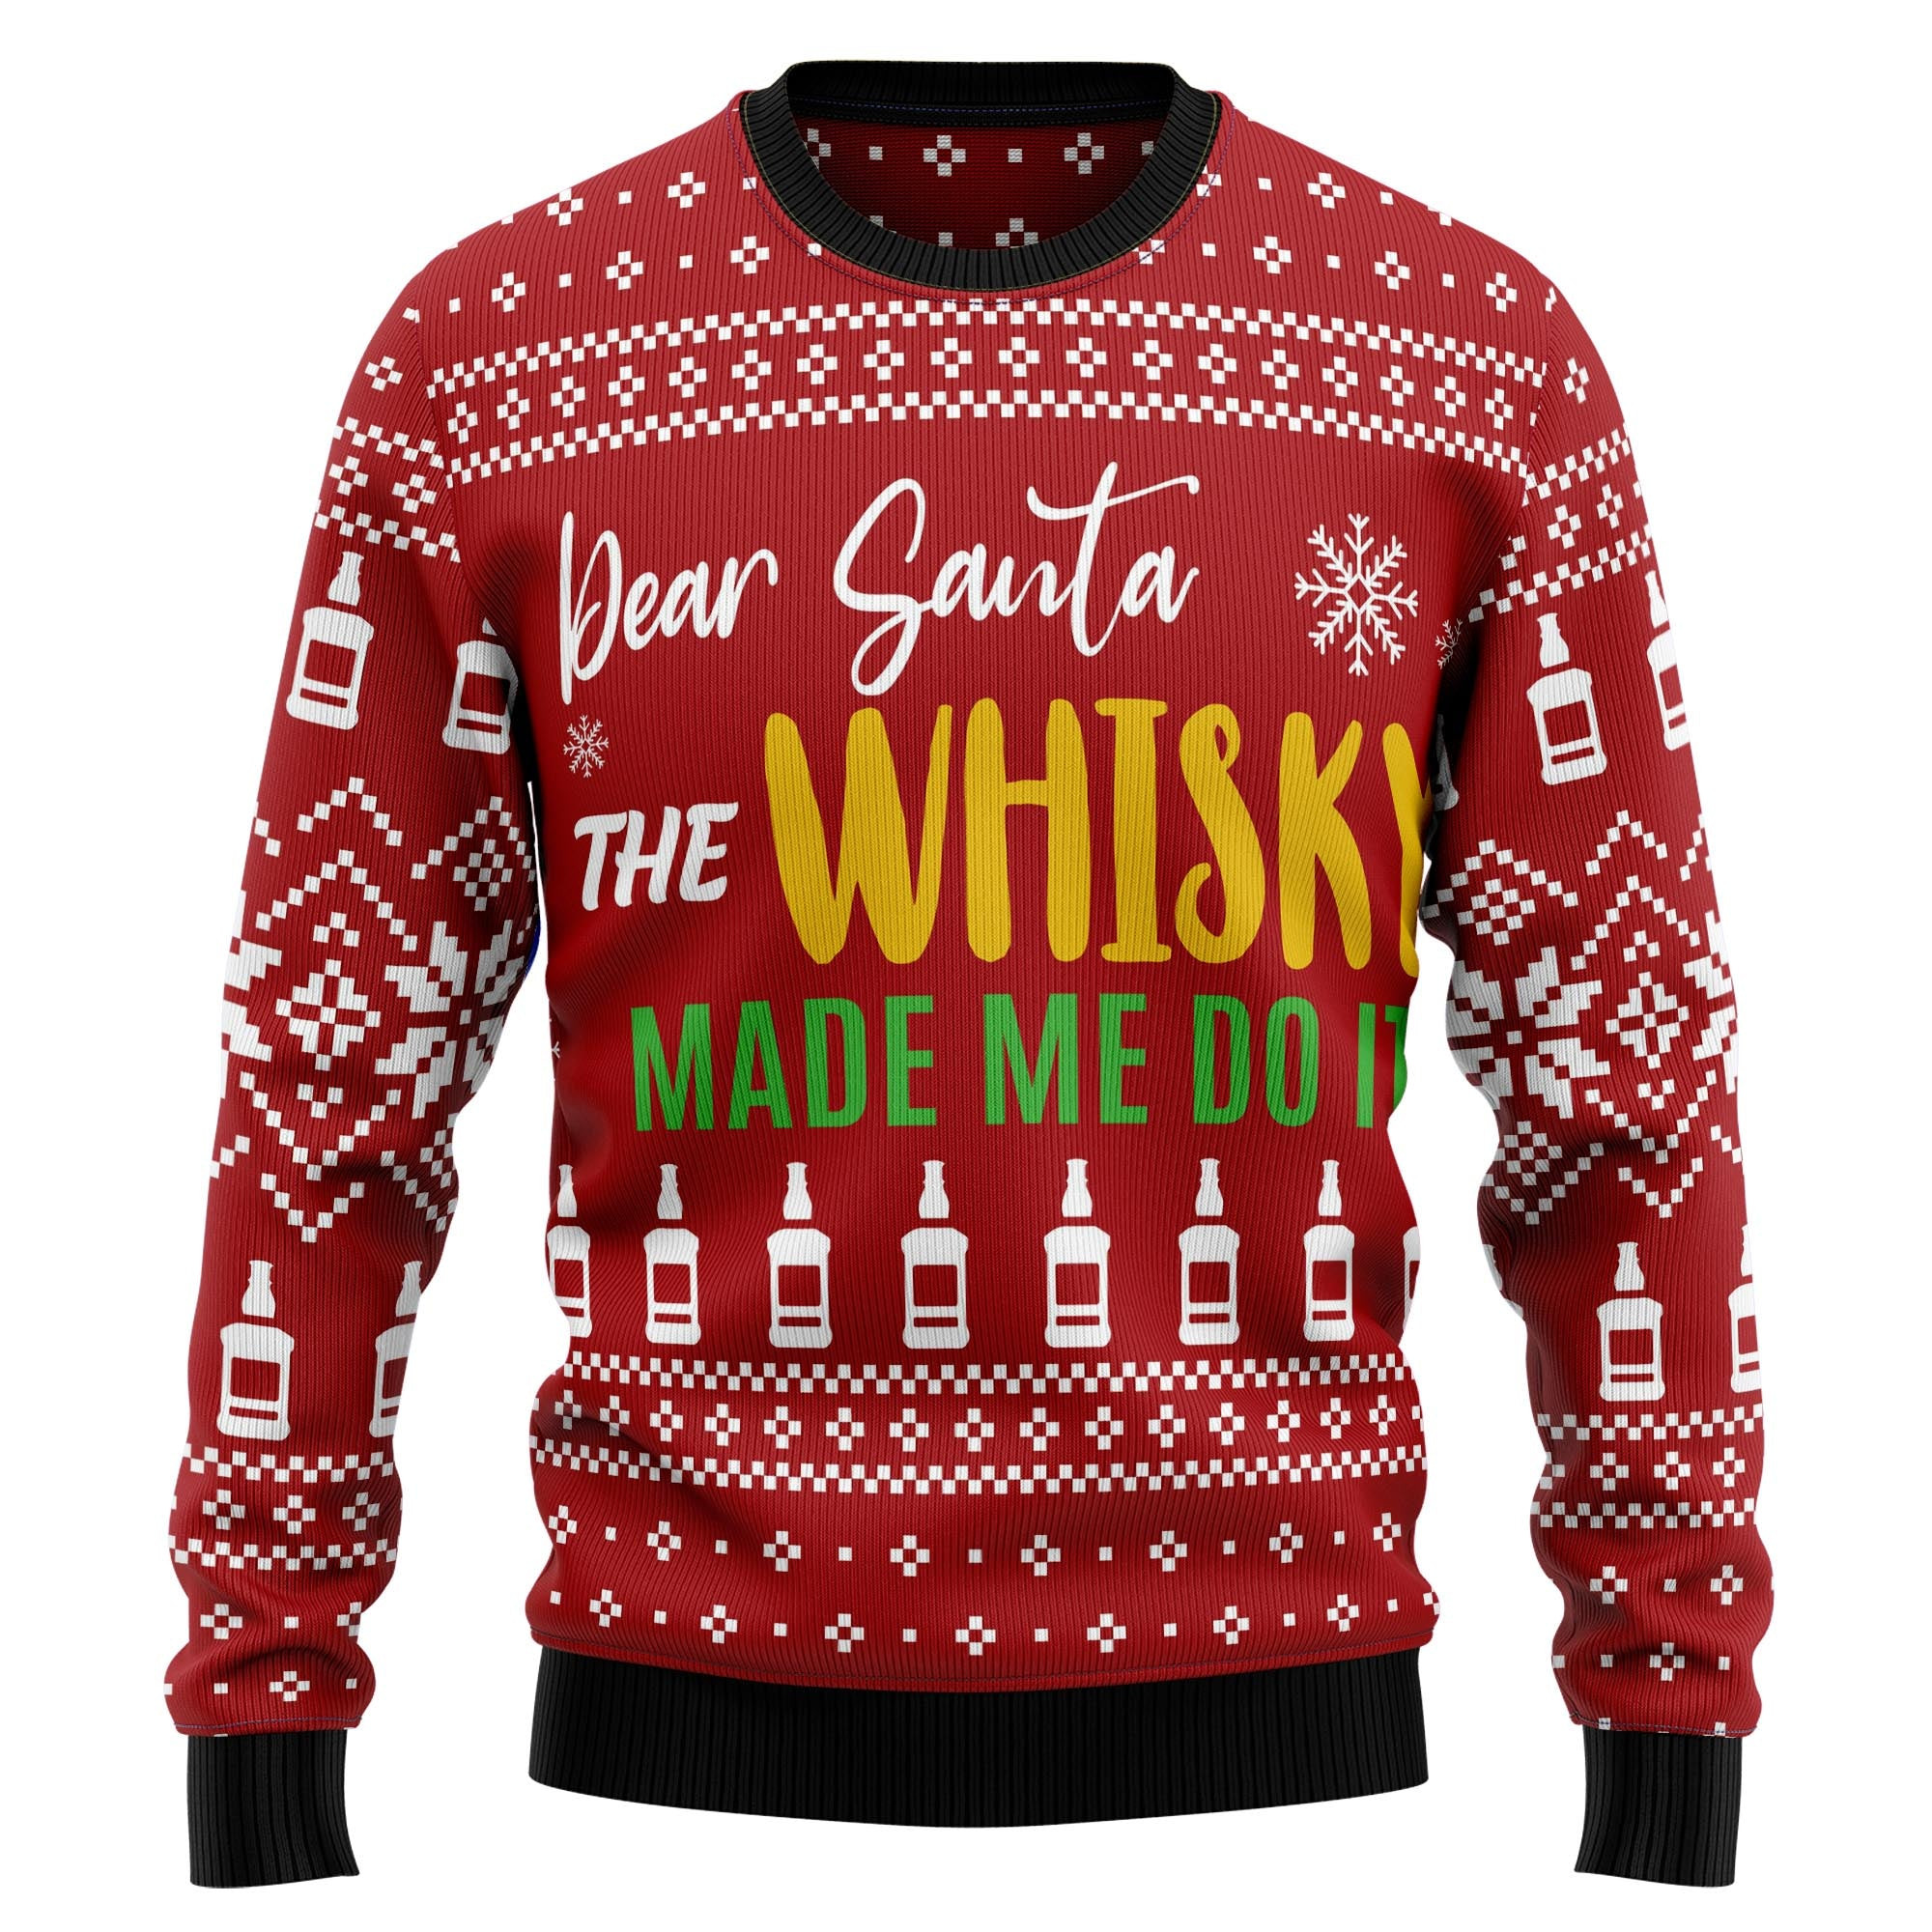 Dear Santa The Whisky Made Me Do It Ugly Christmas Sweater